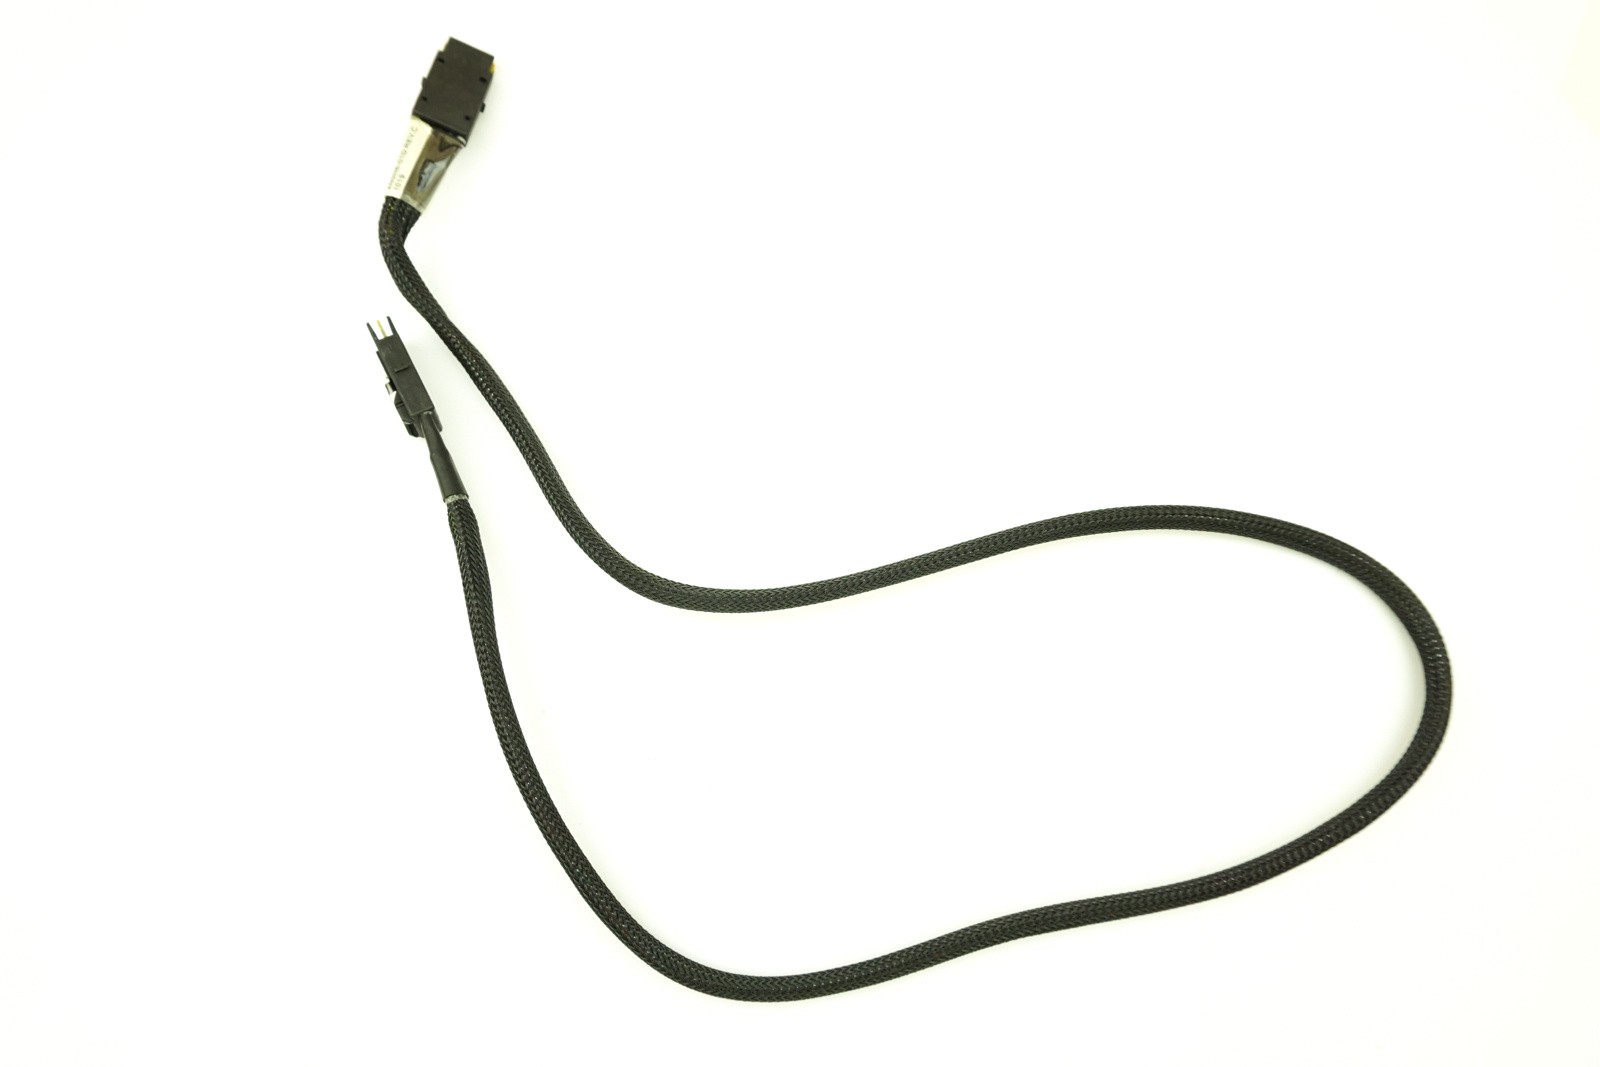 HP DL380 G6, G7 - Internal Mini SAS Cable 33"